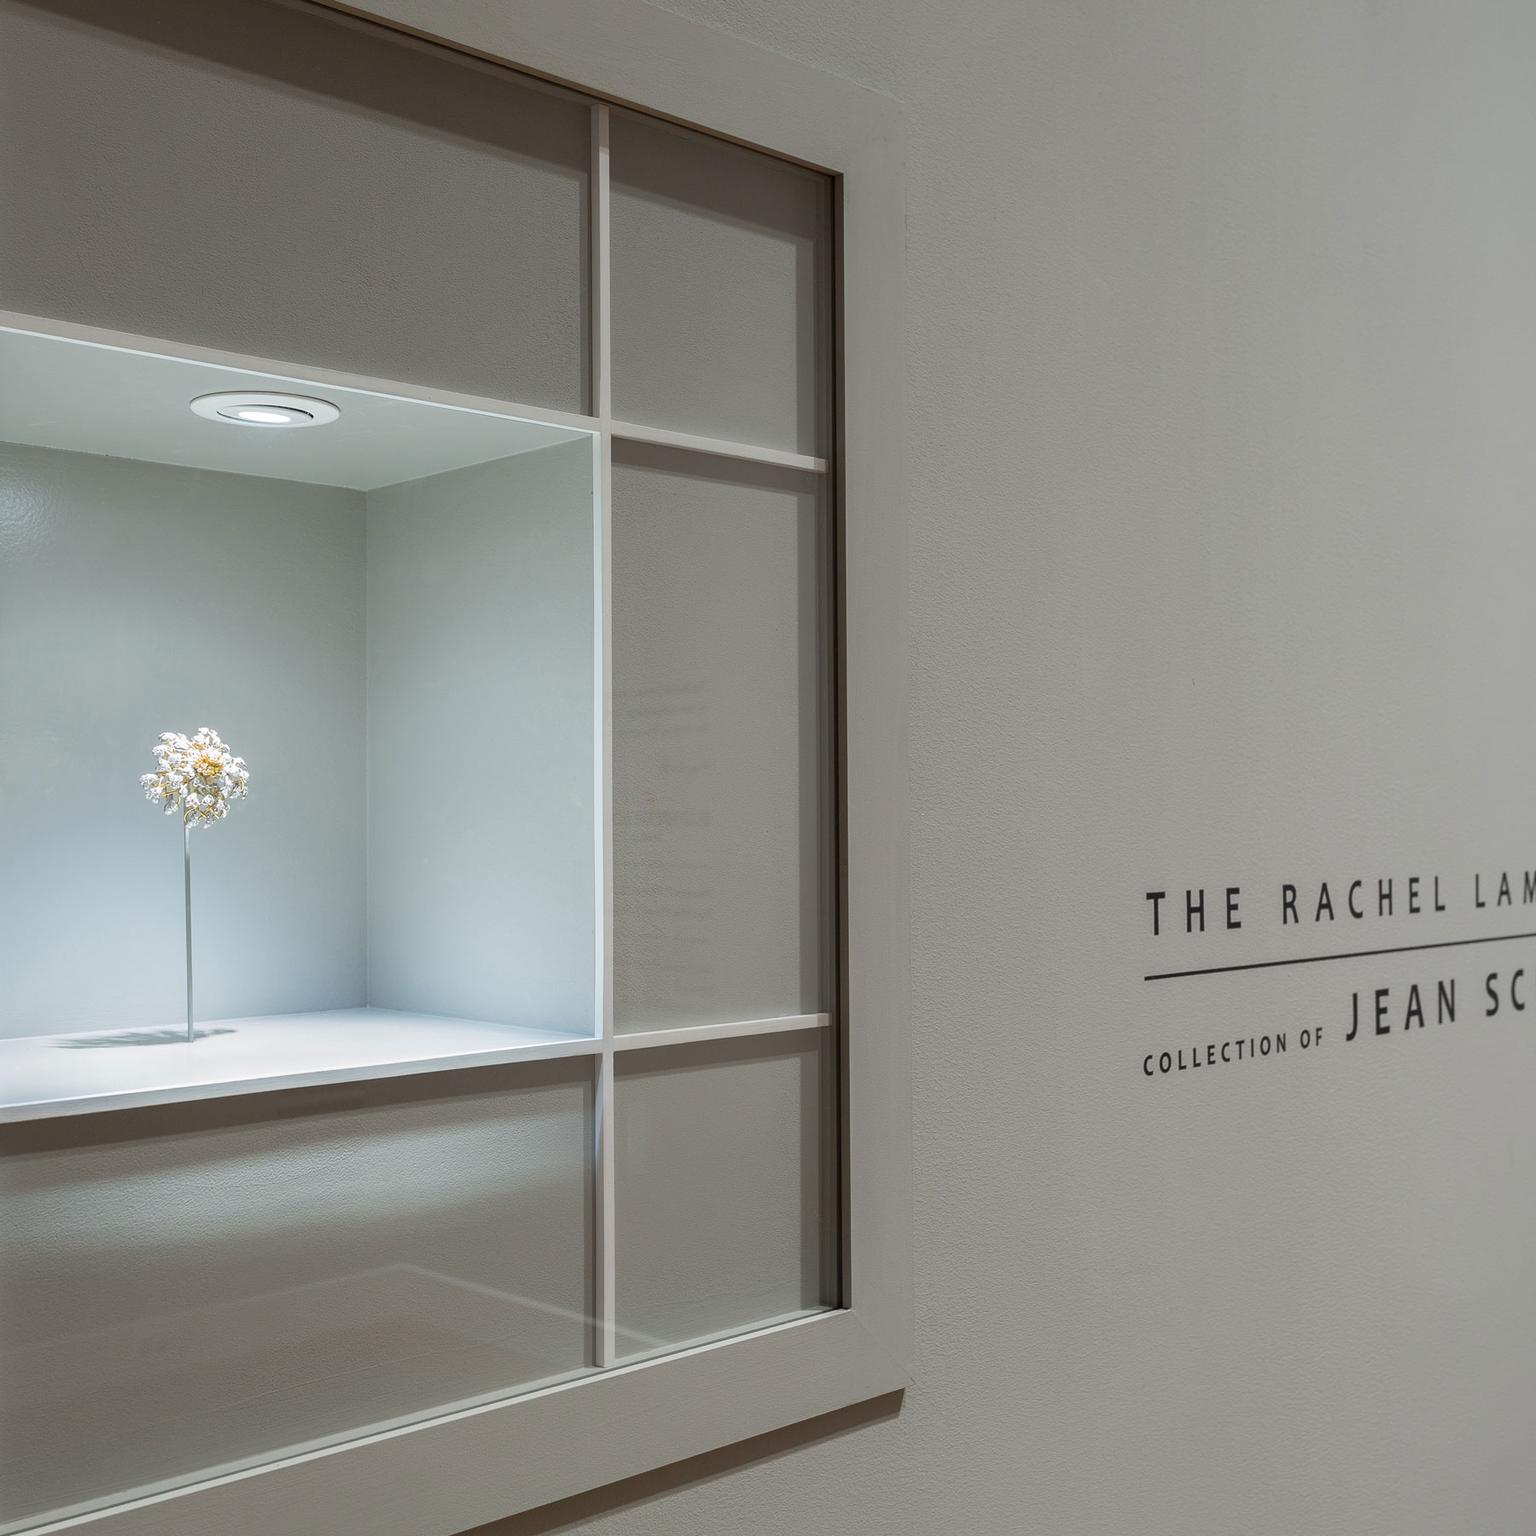 The Rachel Lambert Mellon Collection of Jean Schlumberger exhibited at the VMFA